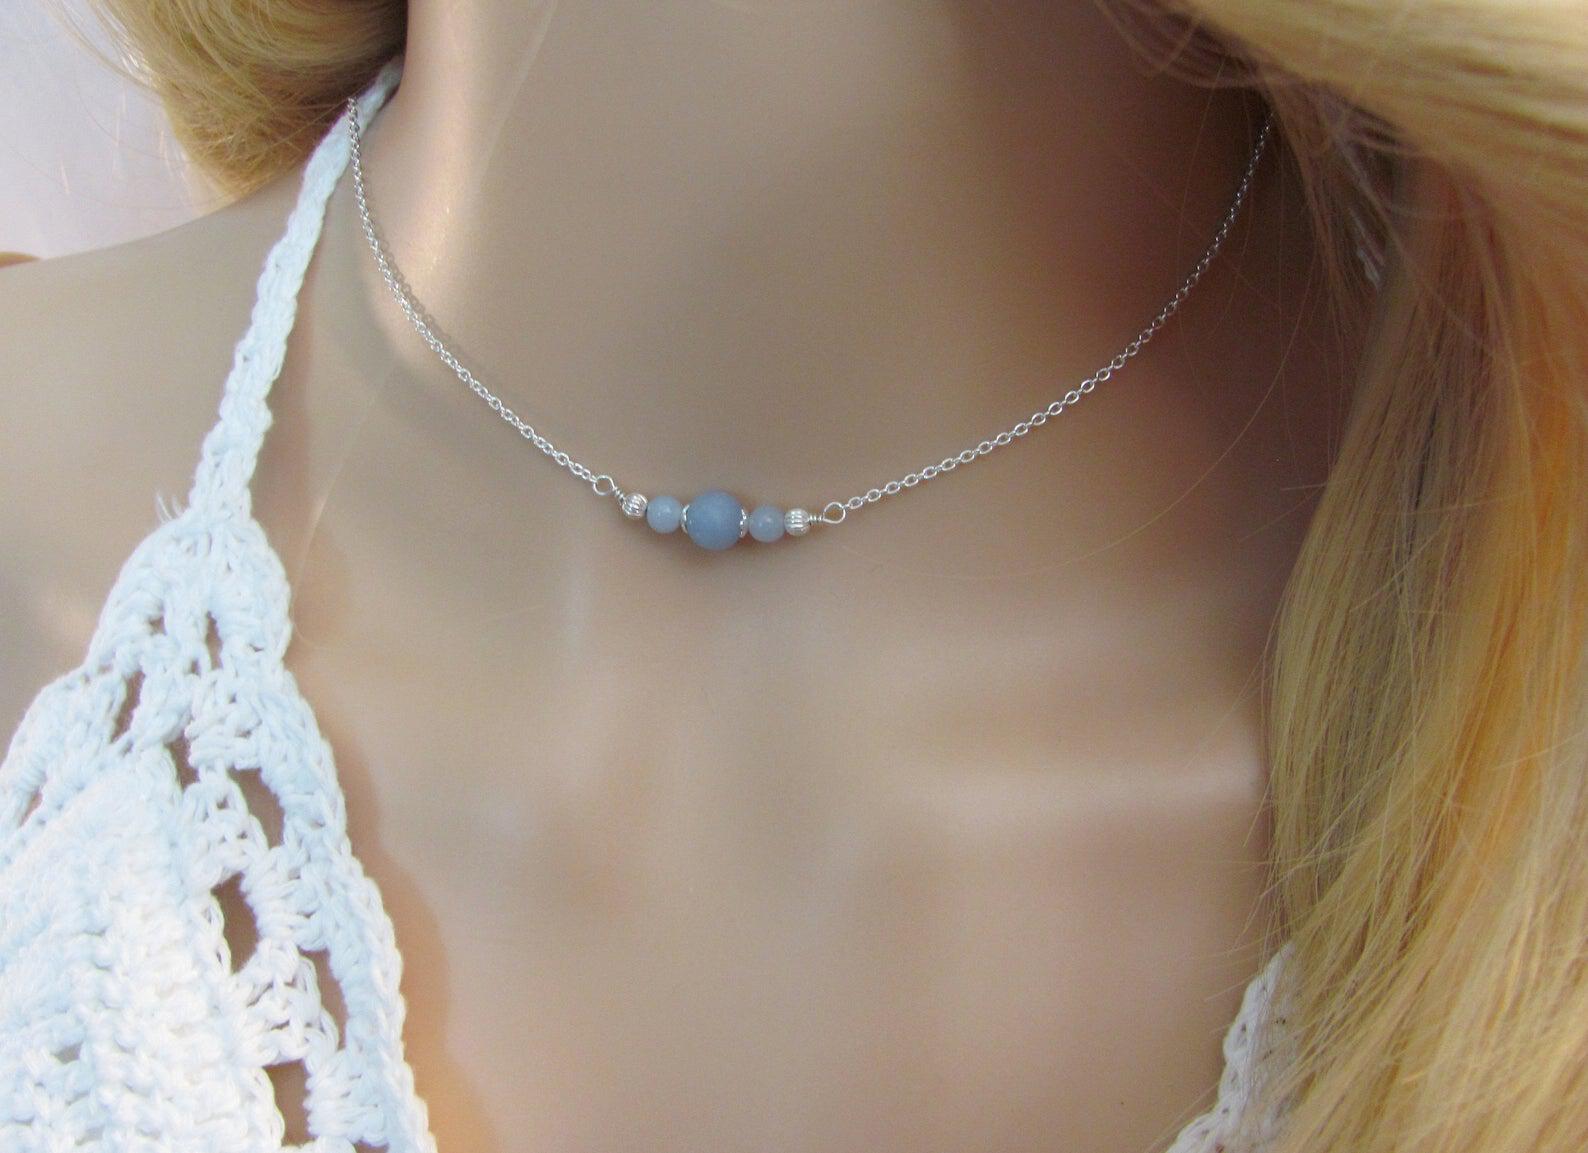 Angelite Necklace, Adjustable  Gemstone Choker